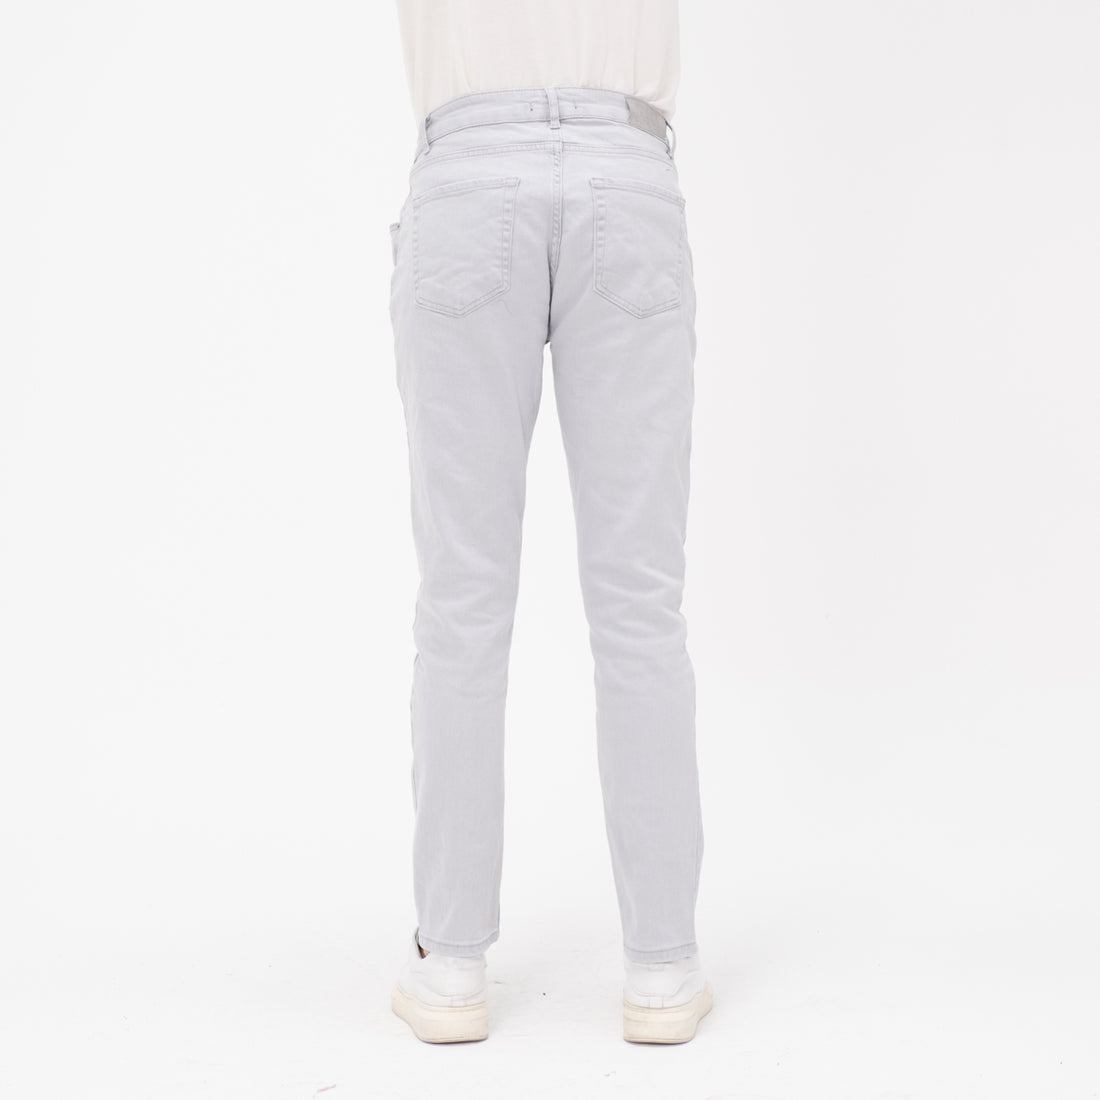 1680 Grey Jeans - Ron Tomson